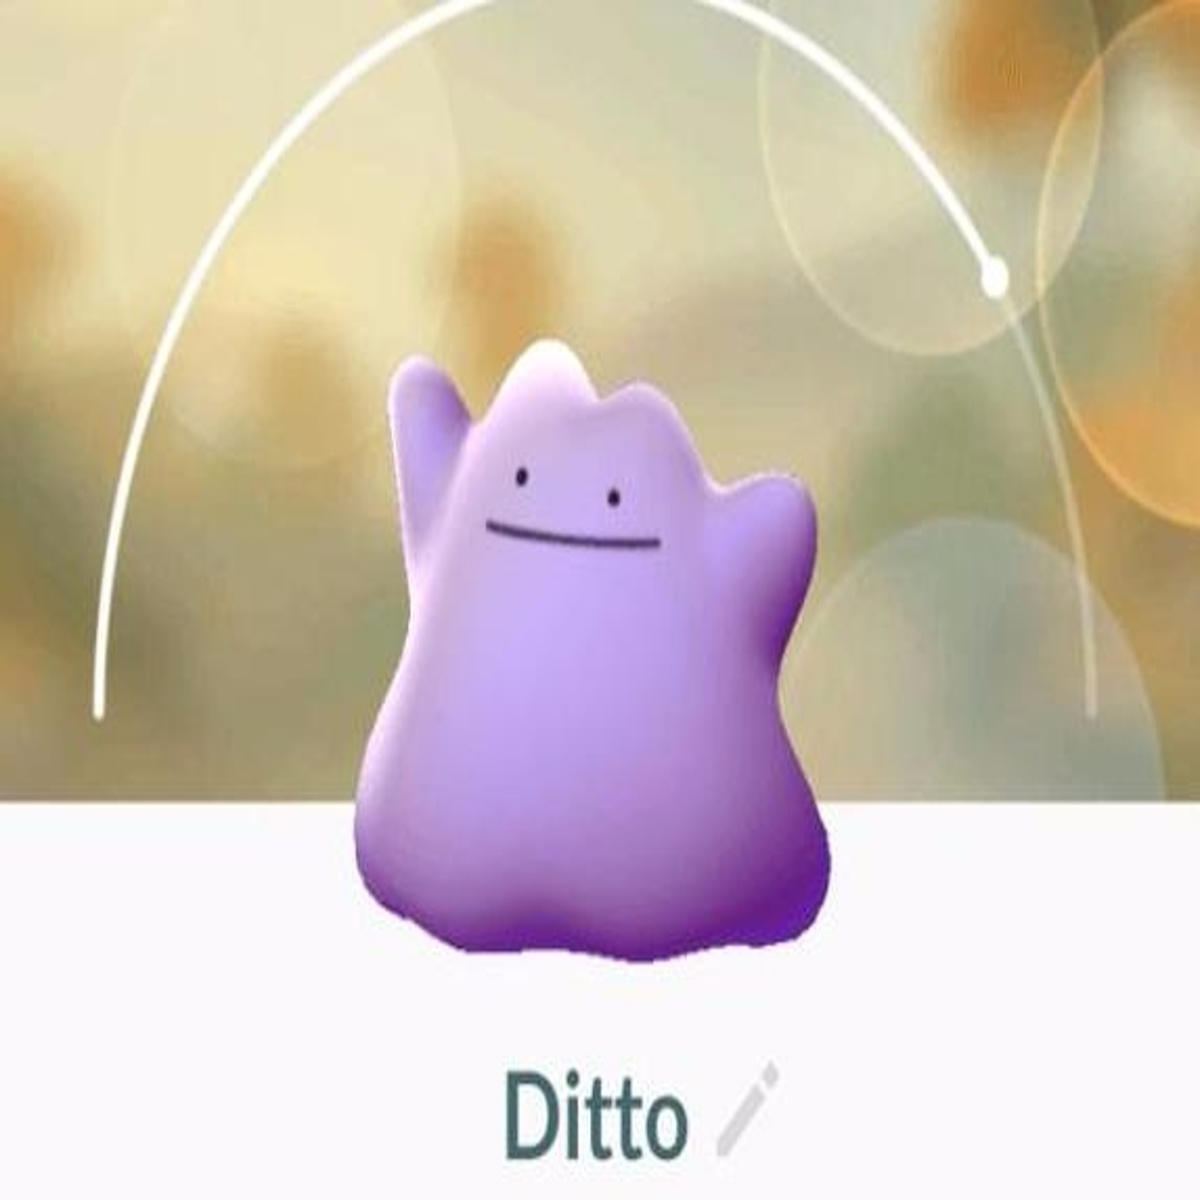 Pokémon GO Ditto Hints